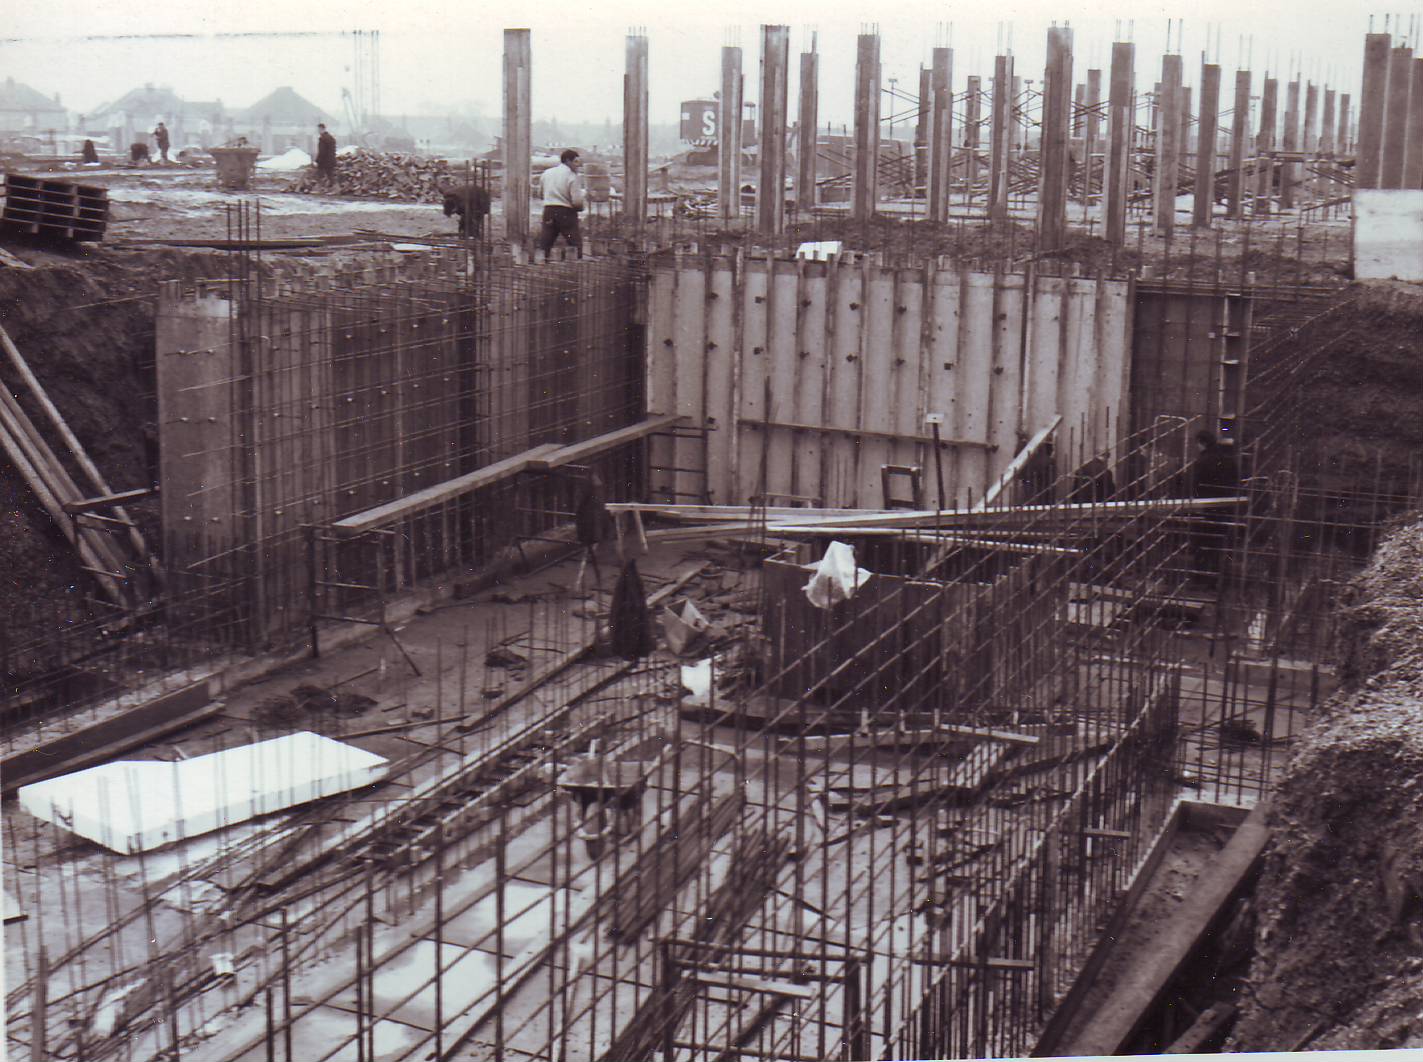 Construction of sub-structure, Dec 1964